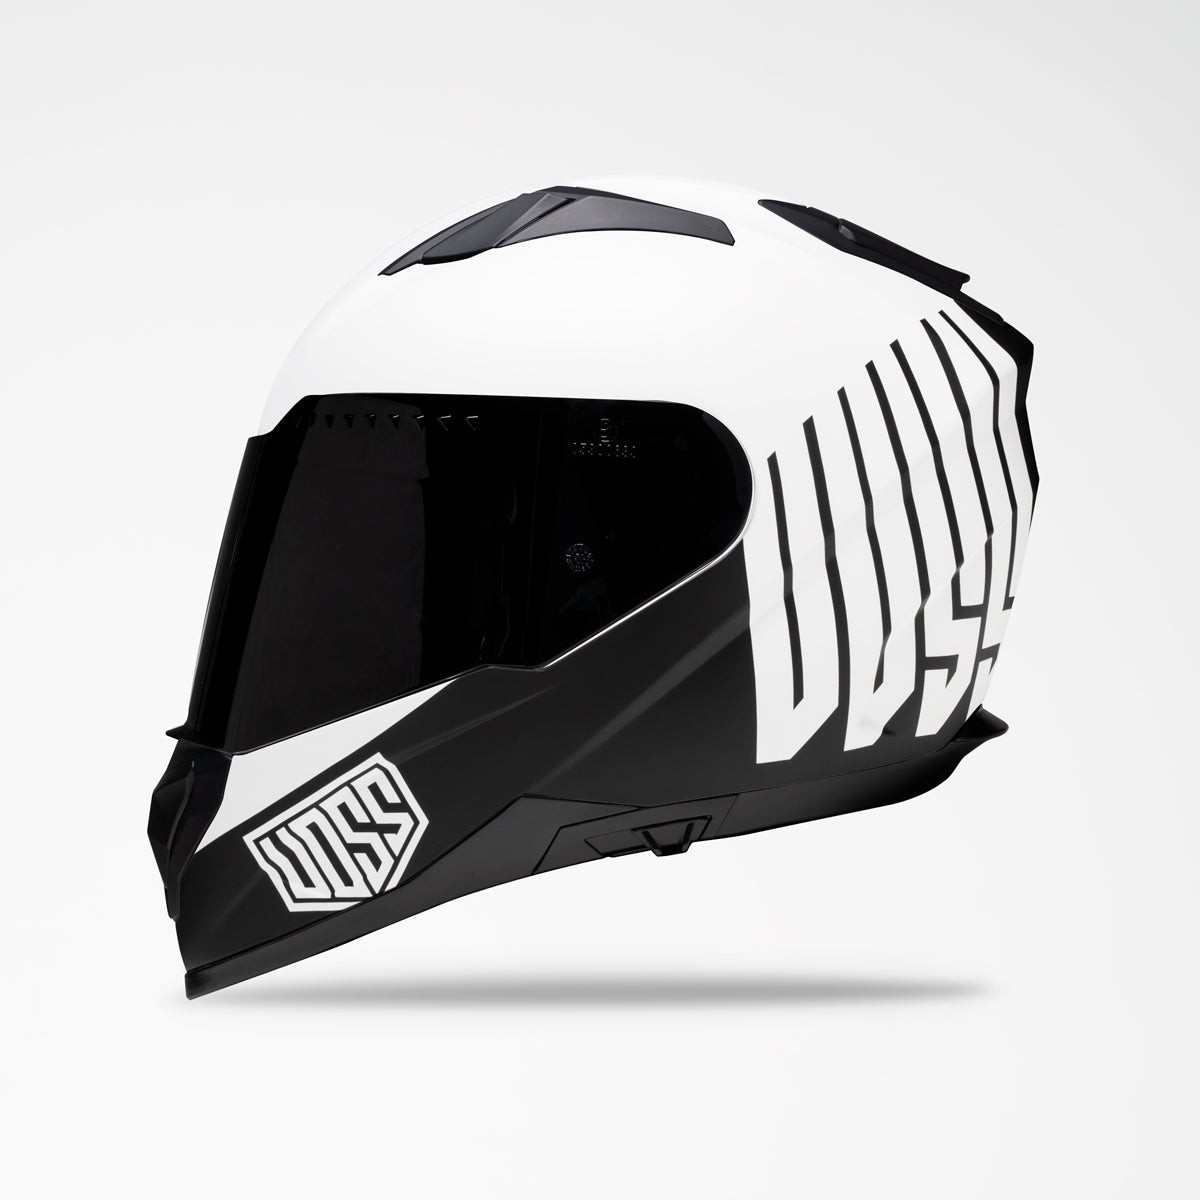 VOSS 989 MOTO-V PARALLAX HELMET - Voss Helmets